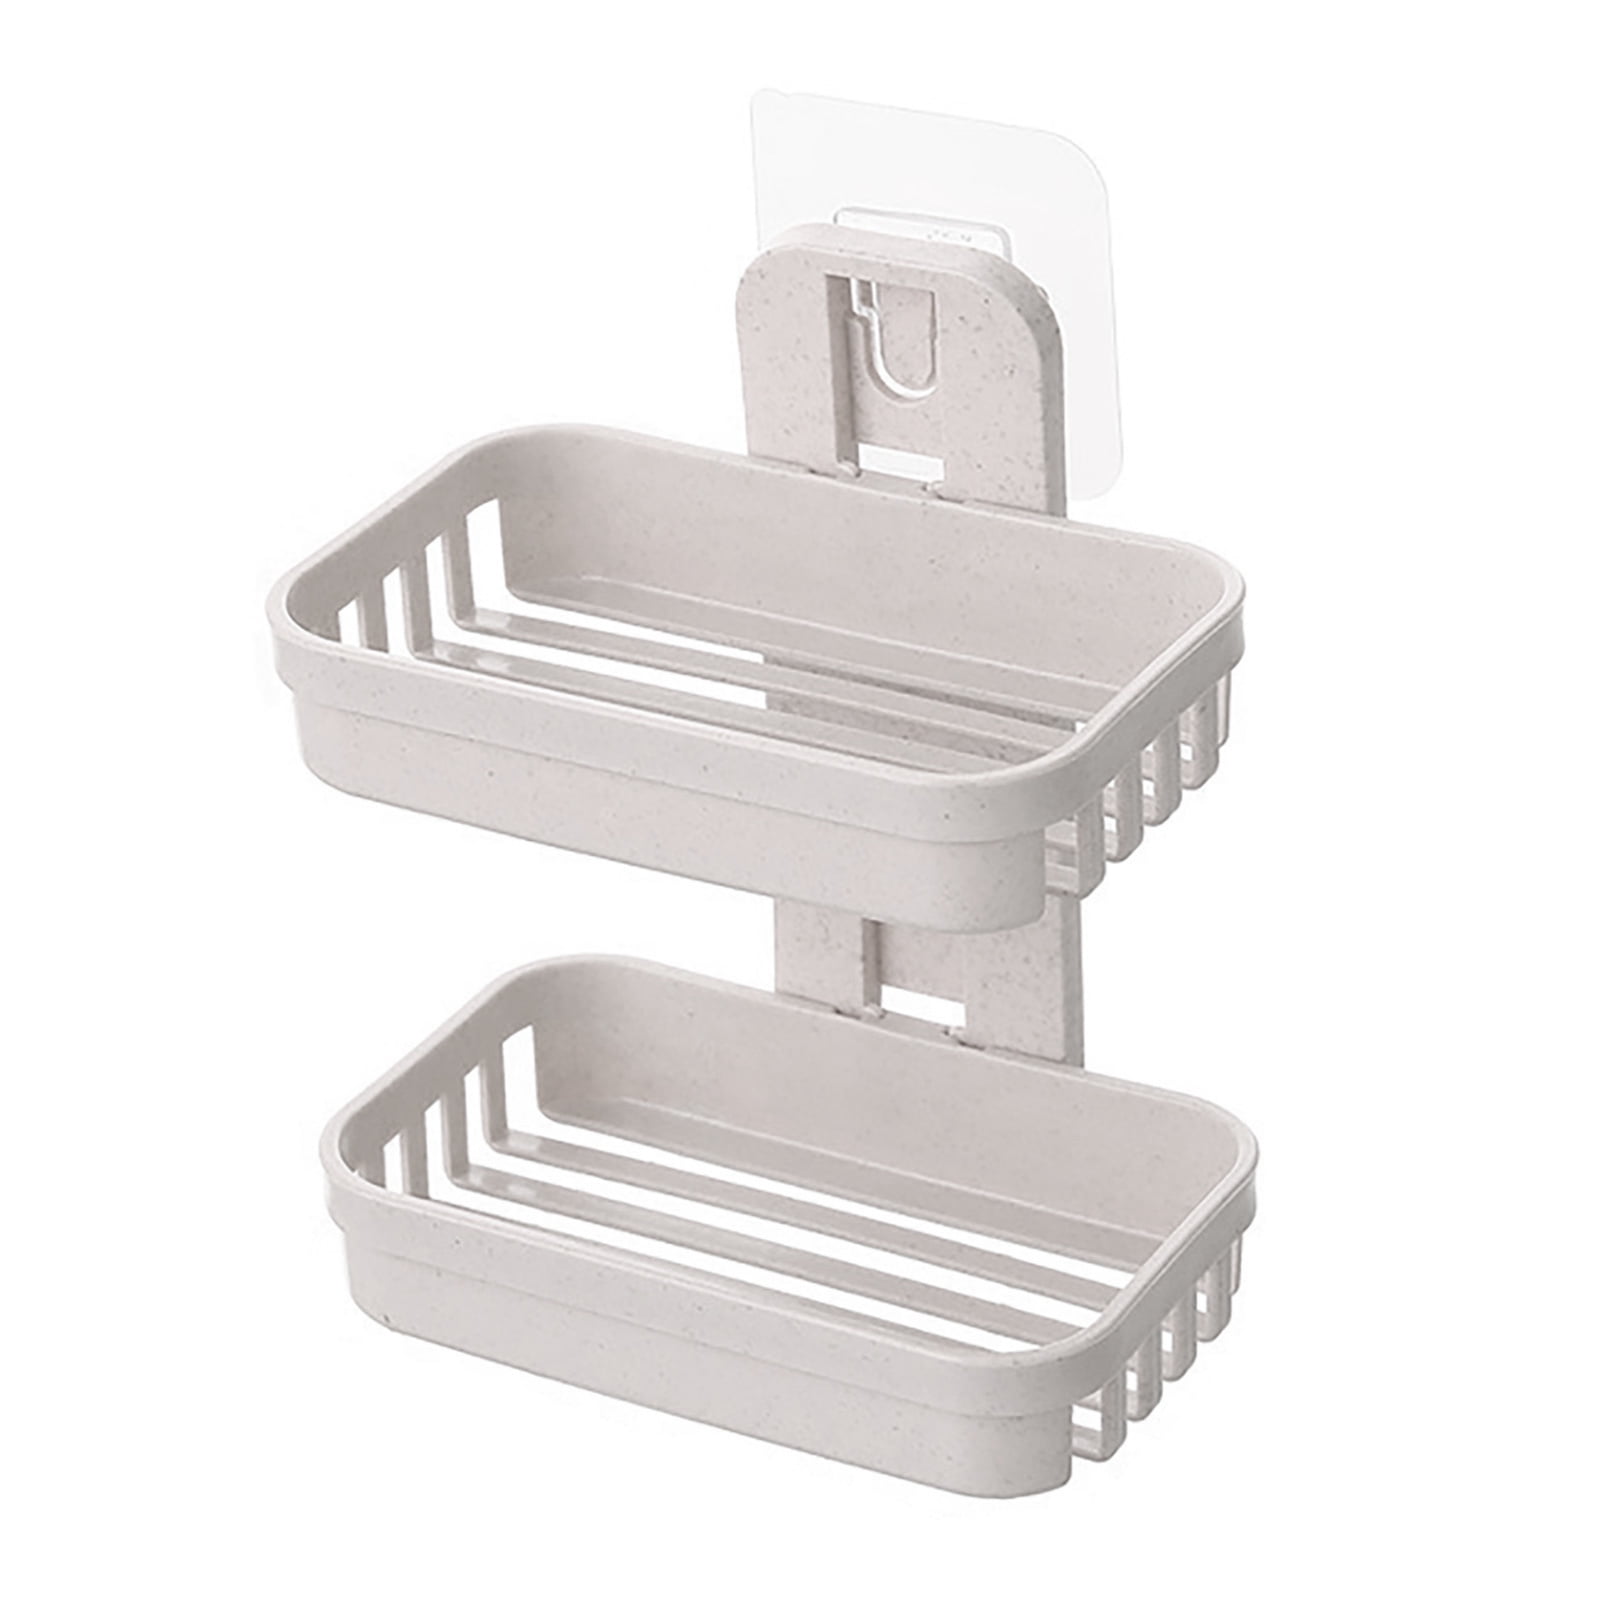 Fealkira Powerful Adhesive Soap Dish Holder,Wall Mounted for Bathroom  Shower Soap Holder Saver Box Storage Organizer Rack,Greyish White ABS  Plastic